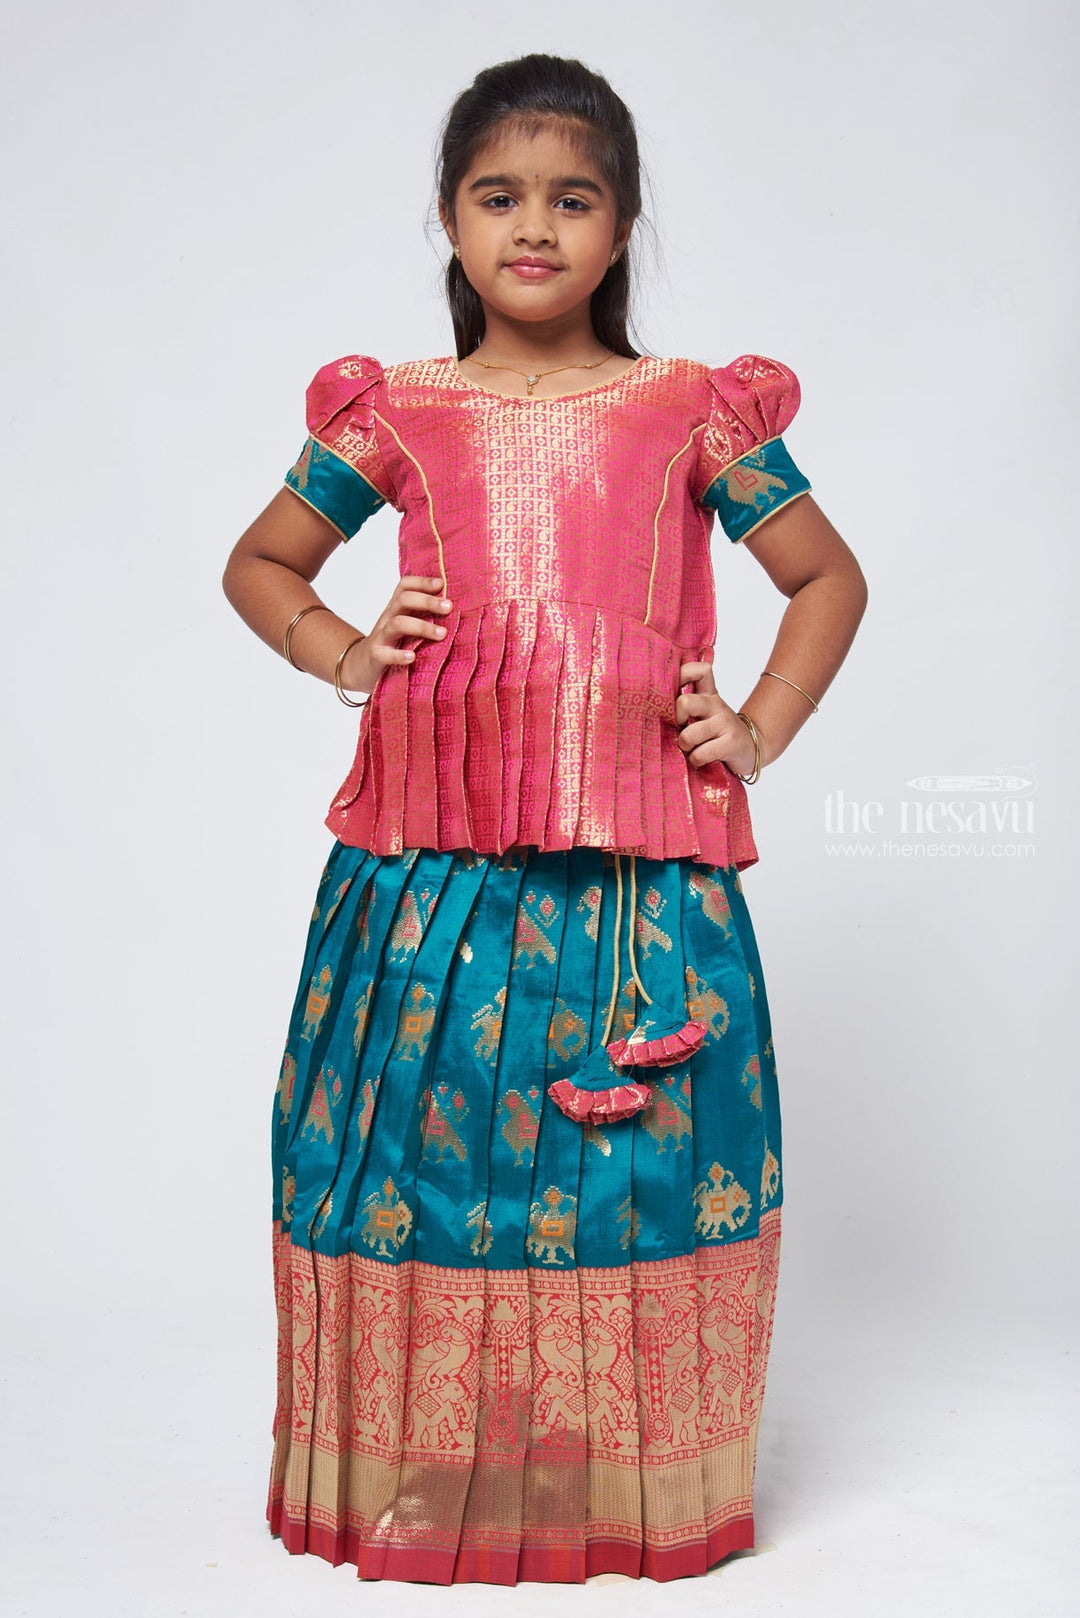 The Nesavu Pattu Pavadai Classic Pattu Langa Silk Peplum Green Blouse with Traditional Pavadai Sattai - Festive Delight Nesavu 24 (5Y) / Green / Silk Blend GPP308A-24 Girls Pattu Skirt And Blouse Set | Indian Ethnic Dress For Kids | The Nesavu